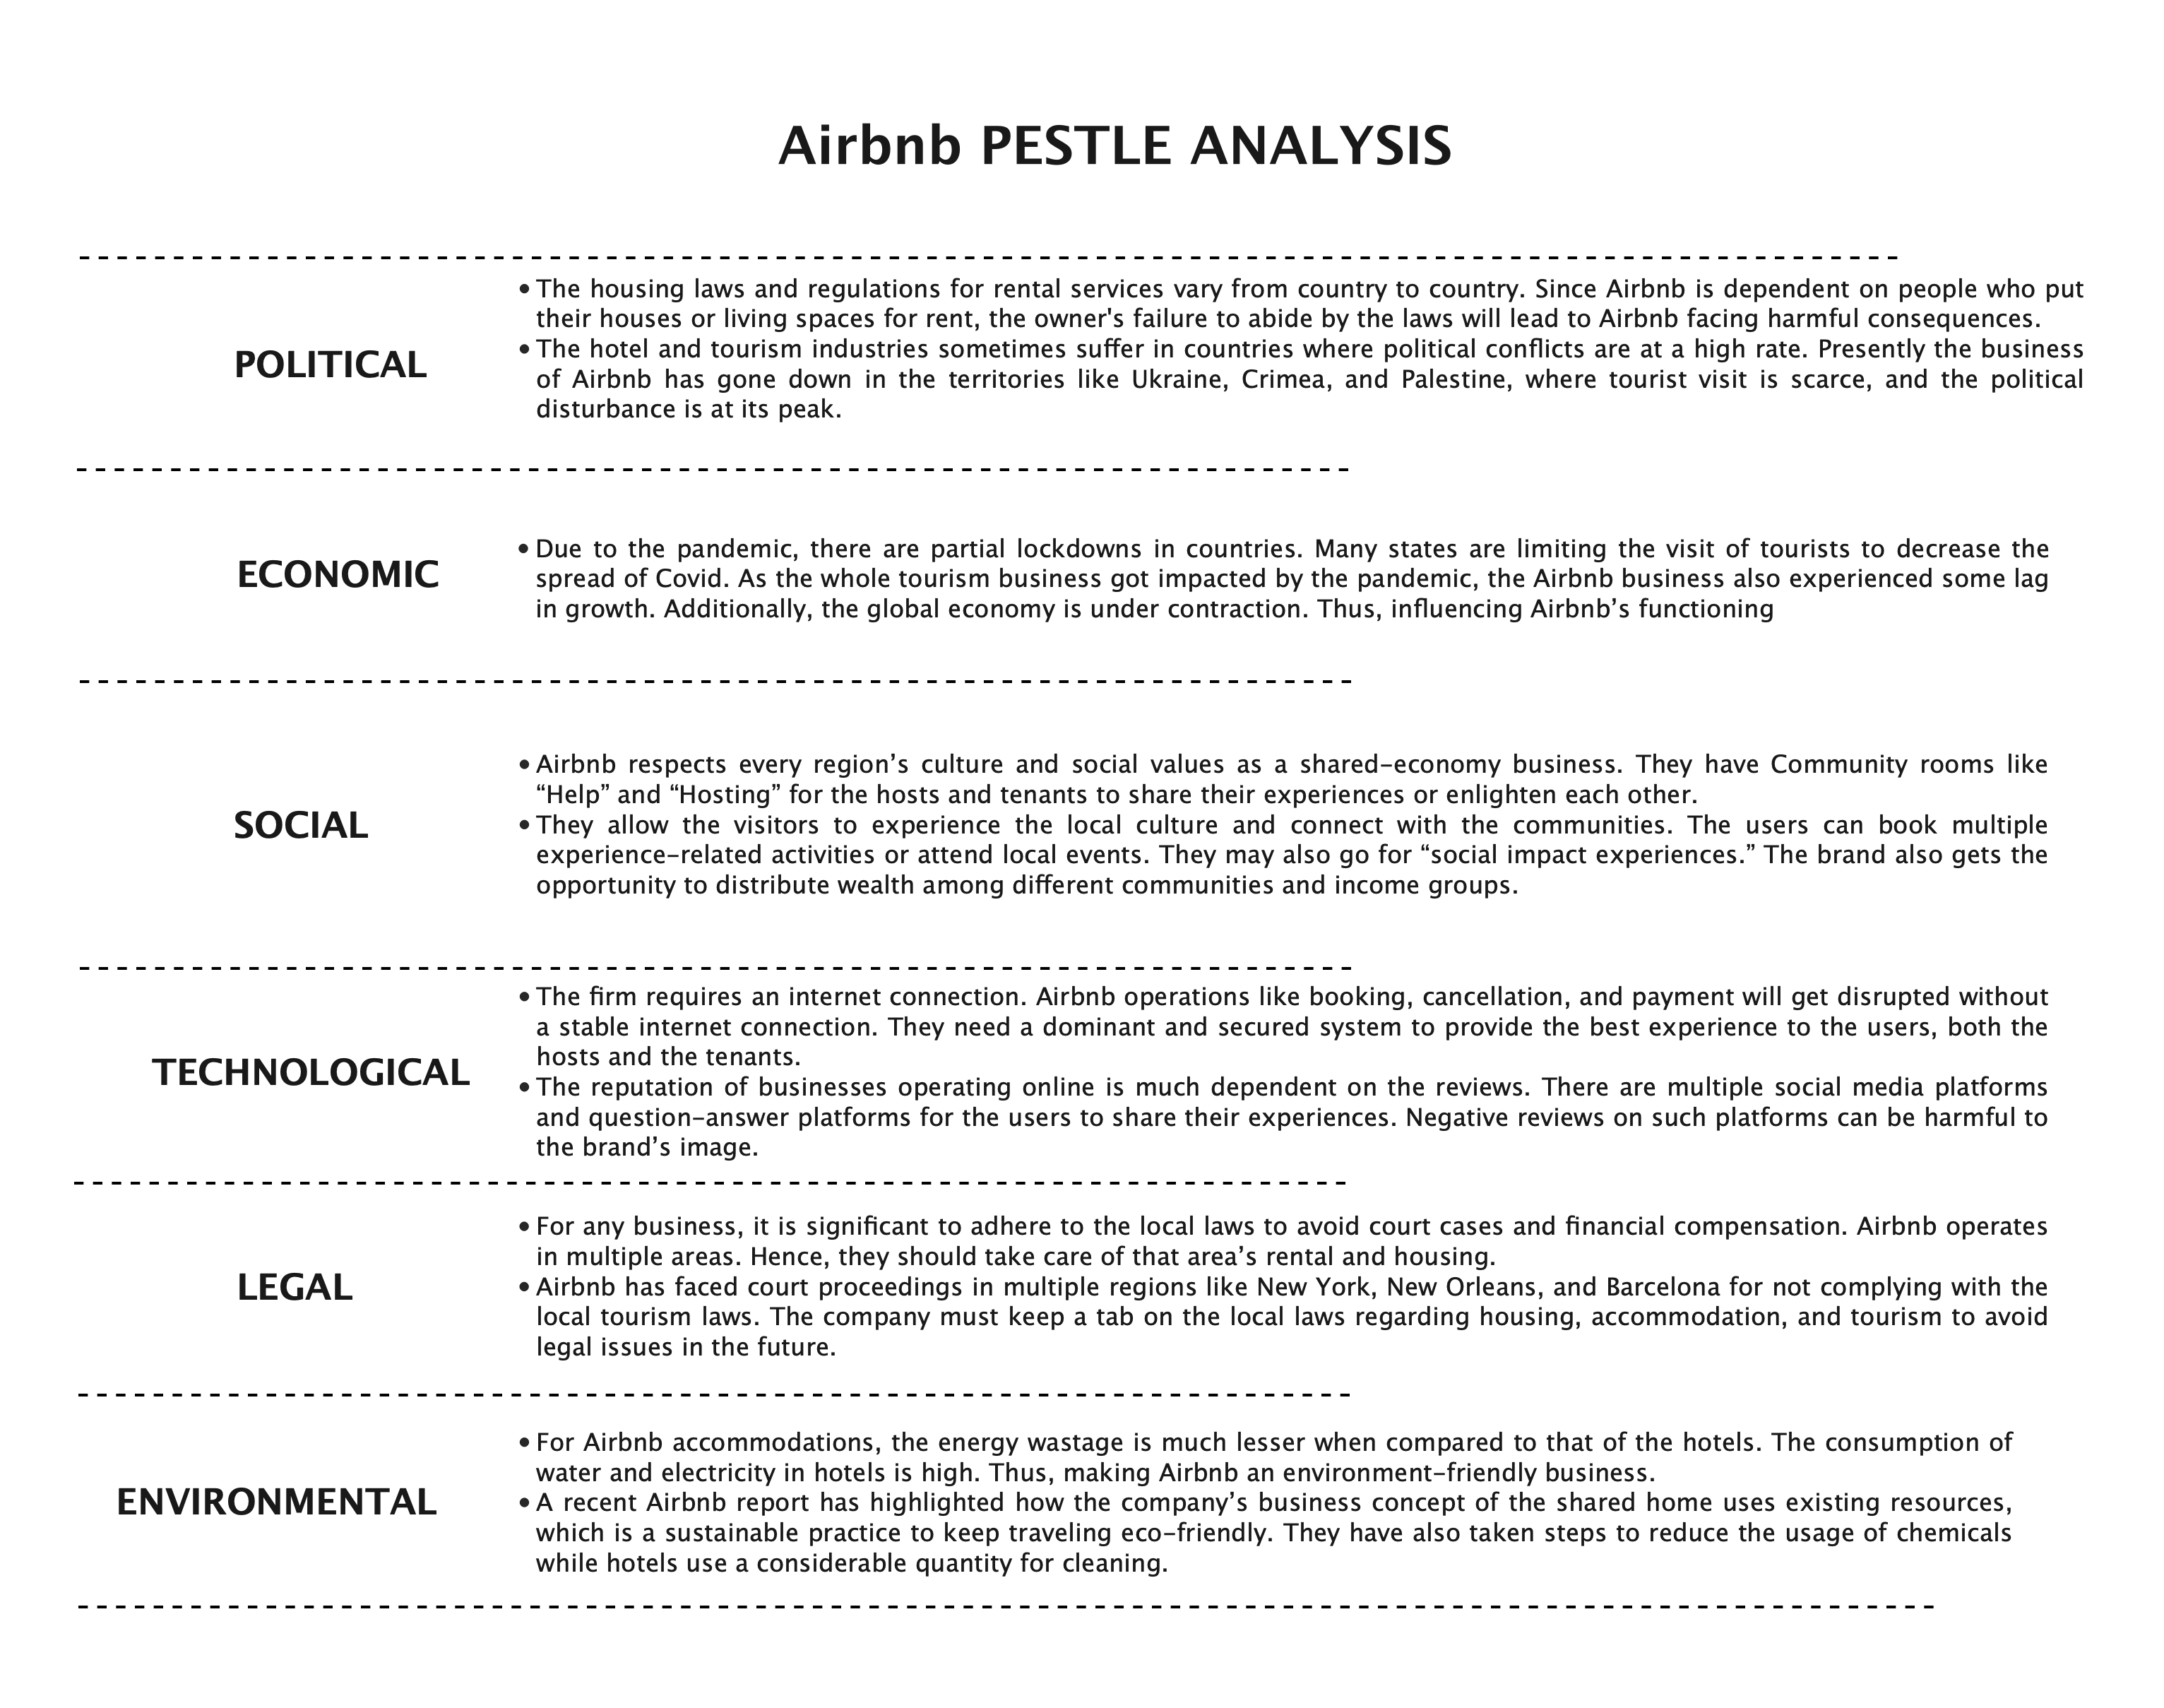 Airbnb PESTEL Analysis